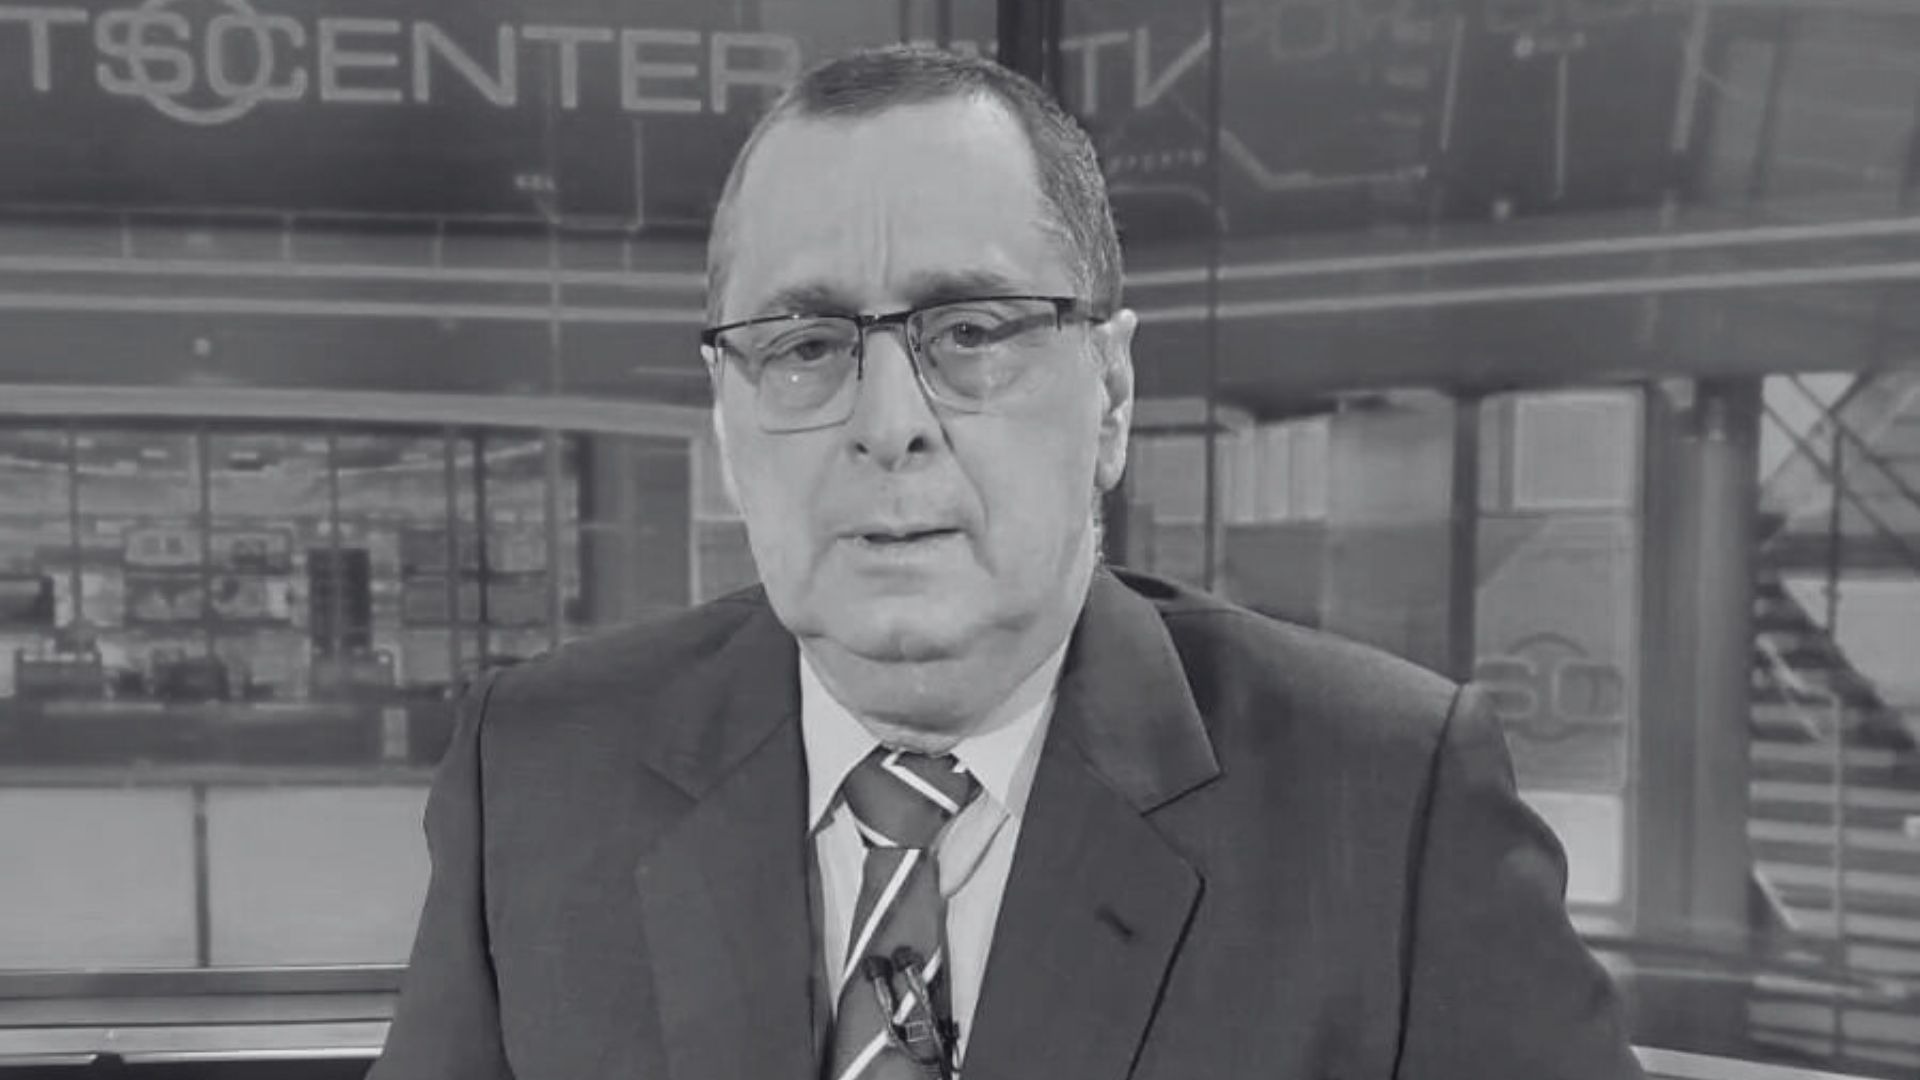 Morre o jornalista e apresentador Antero Greco, da ESPN, aos 69 anos